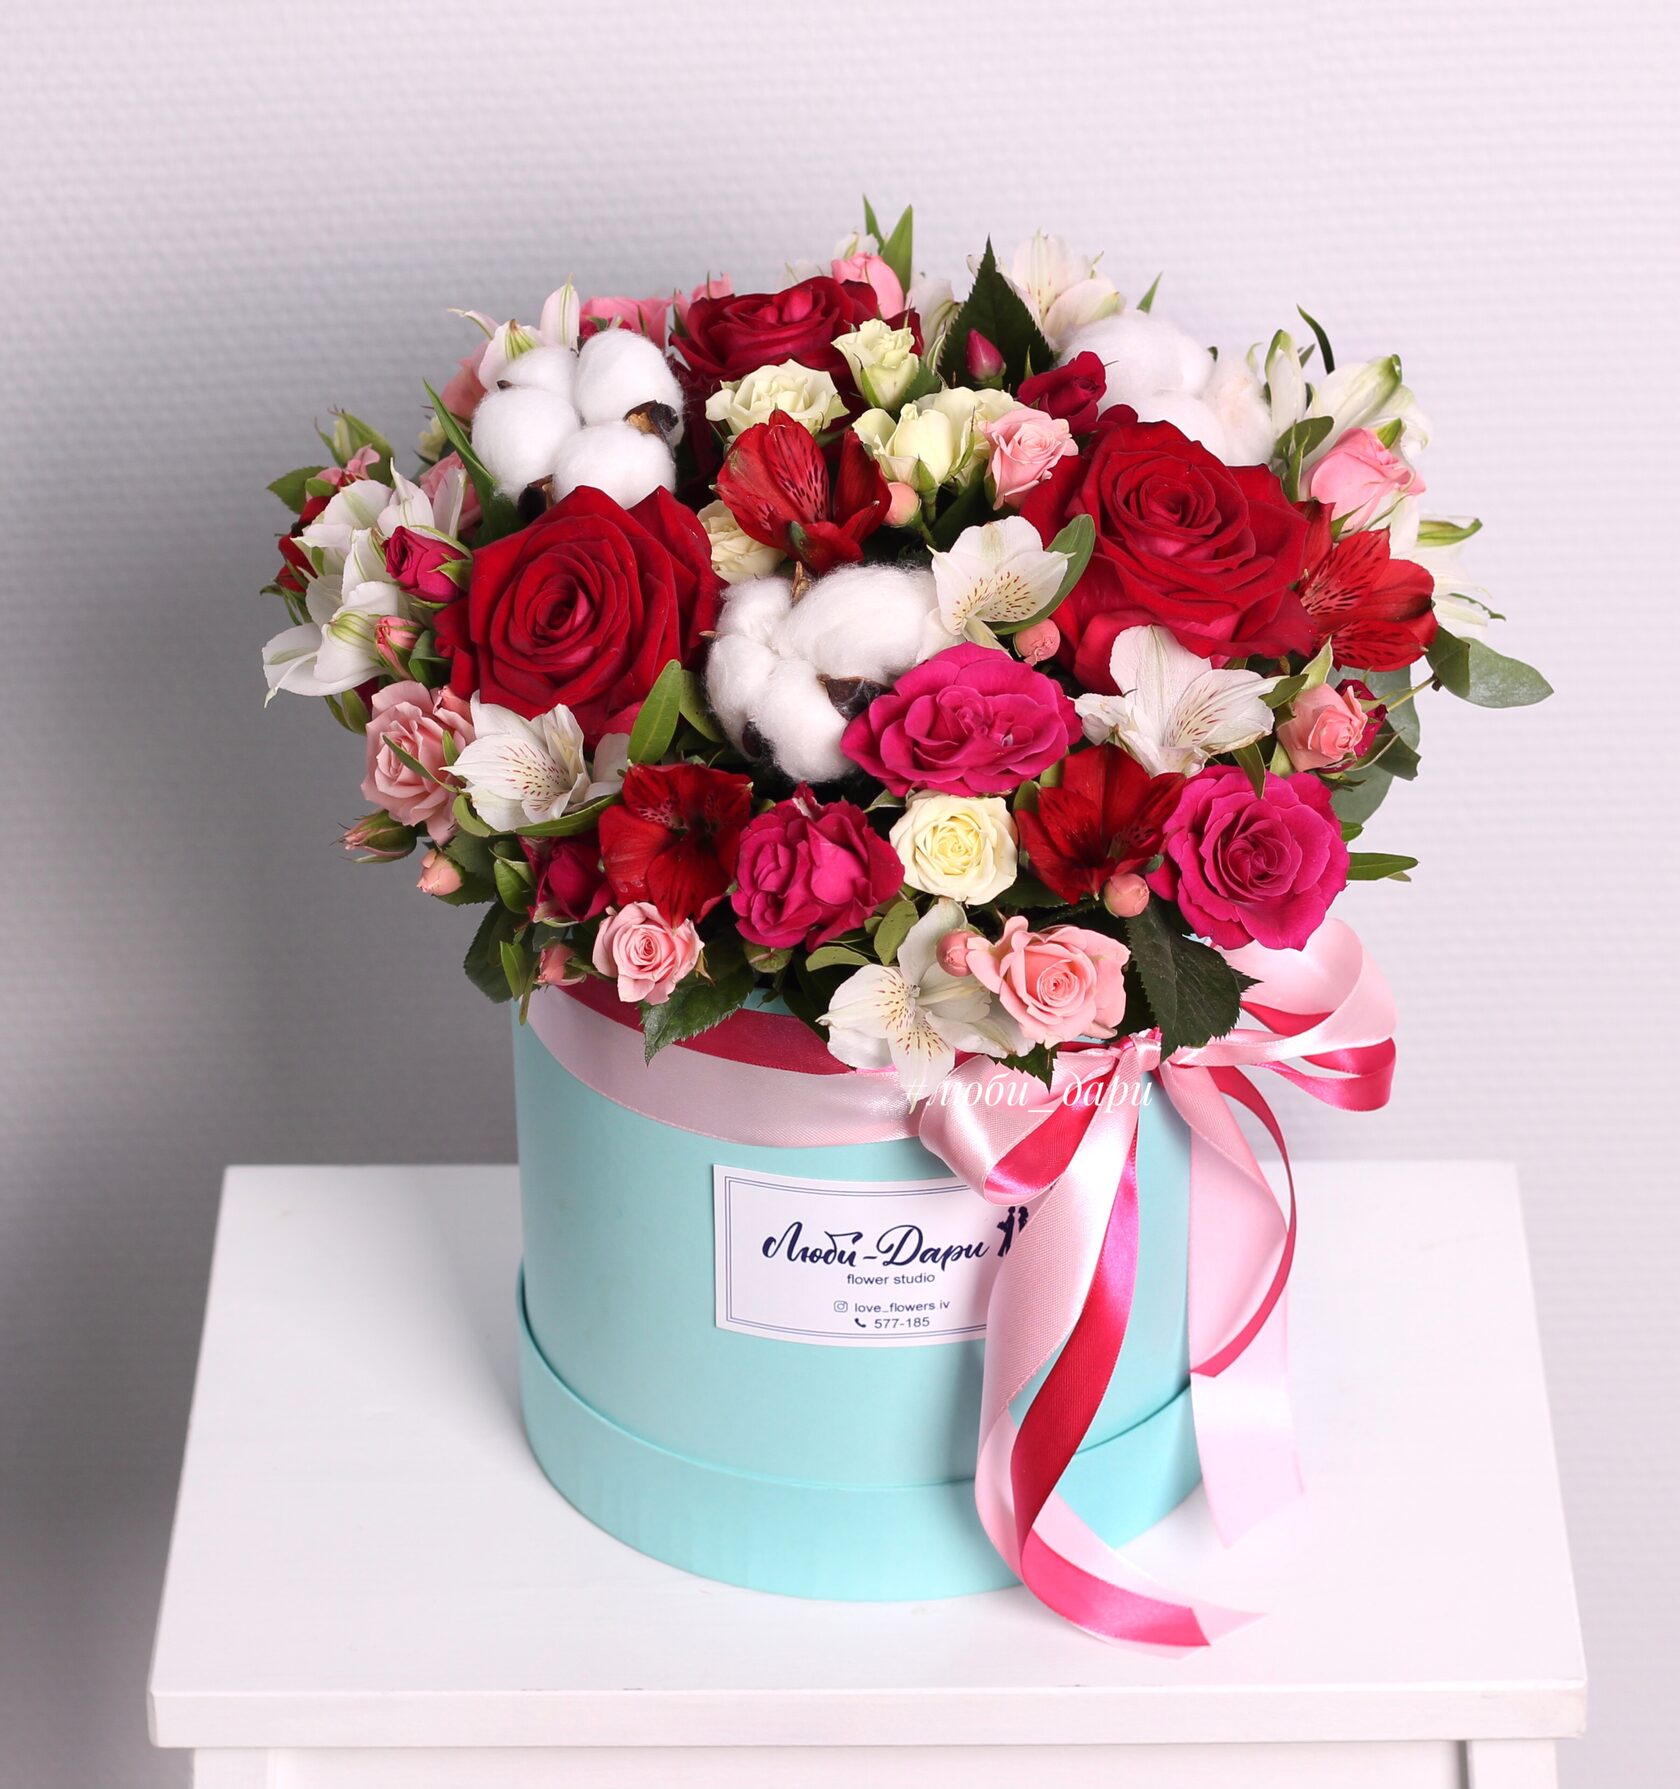 фото тортов коробка с цветами